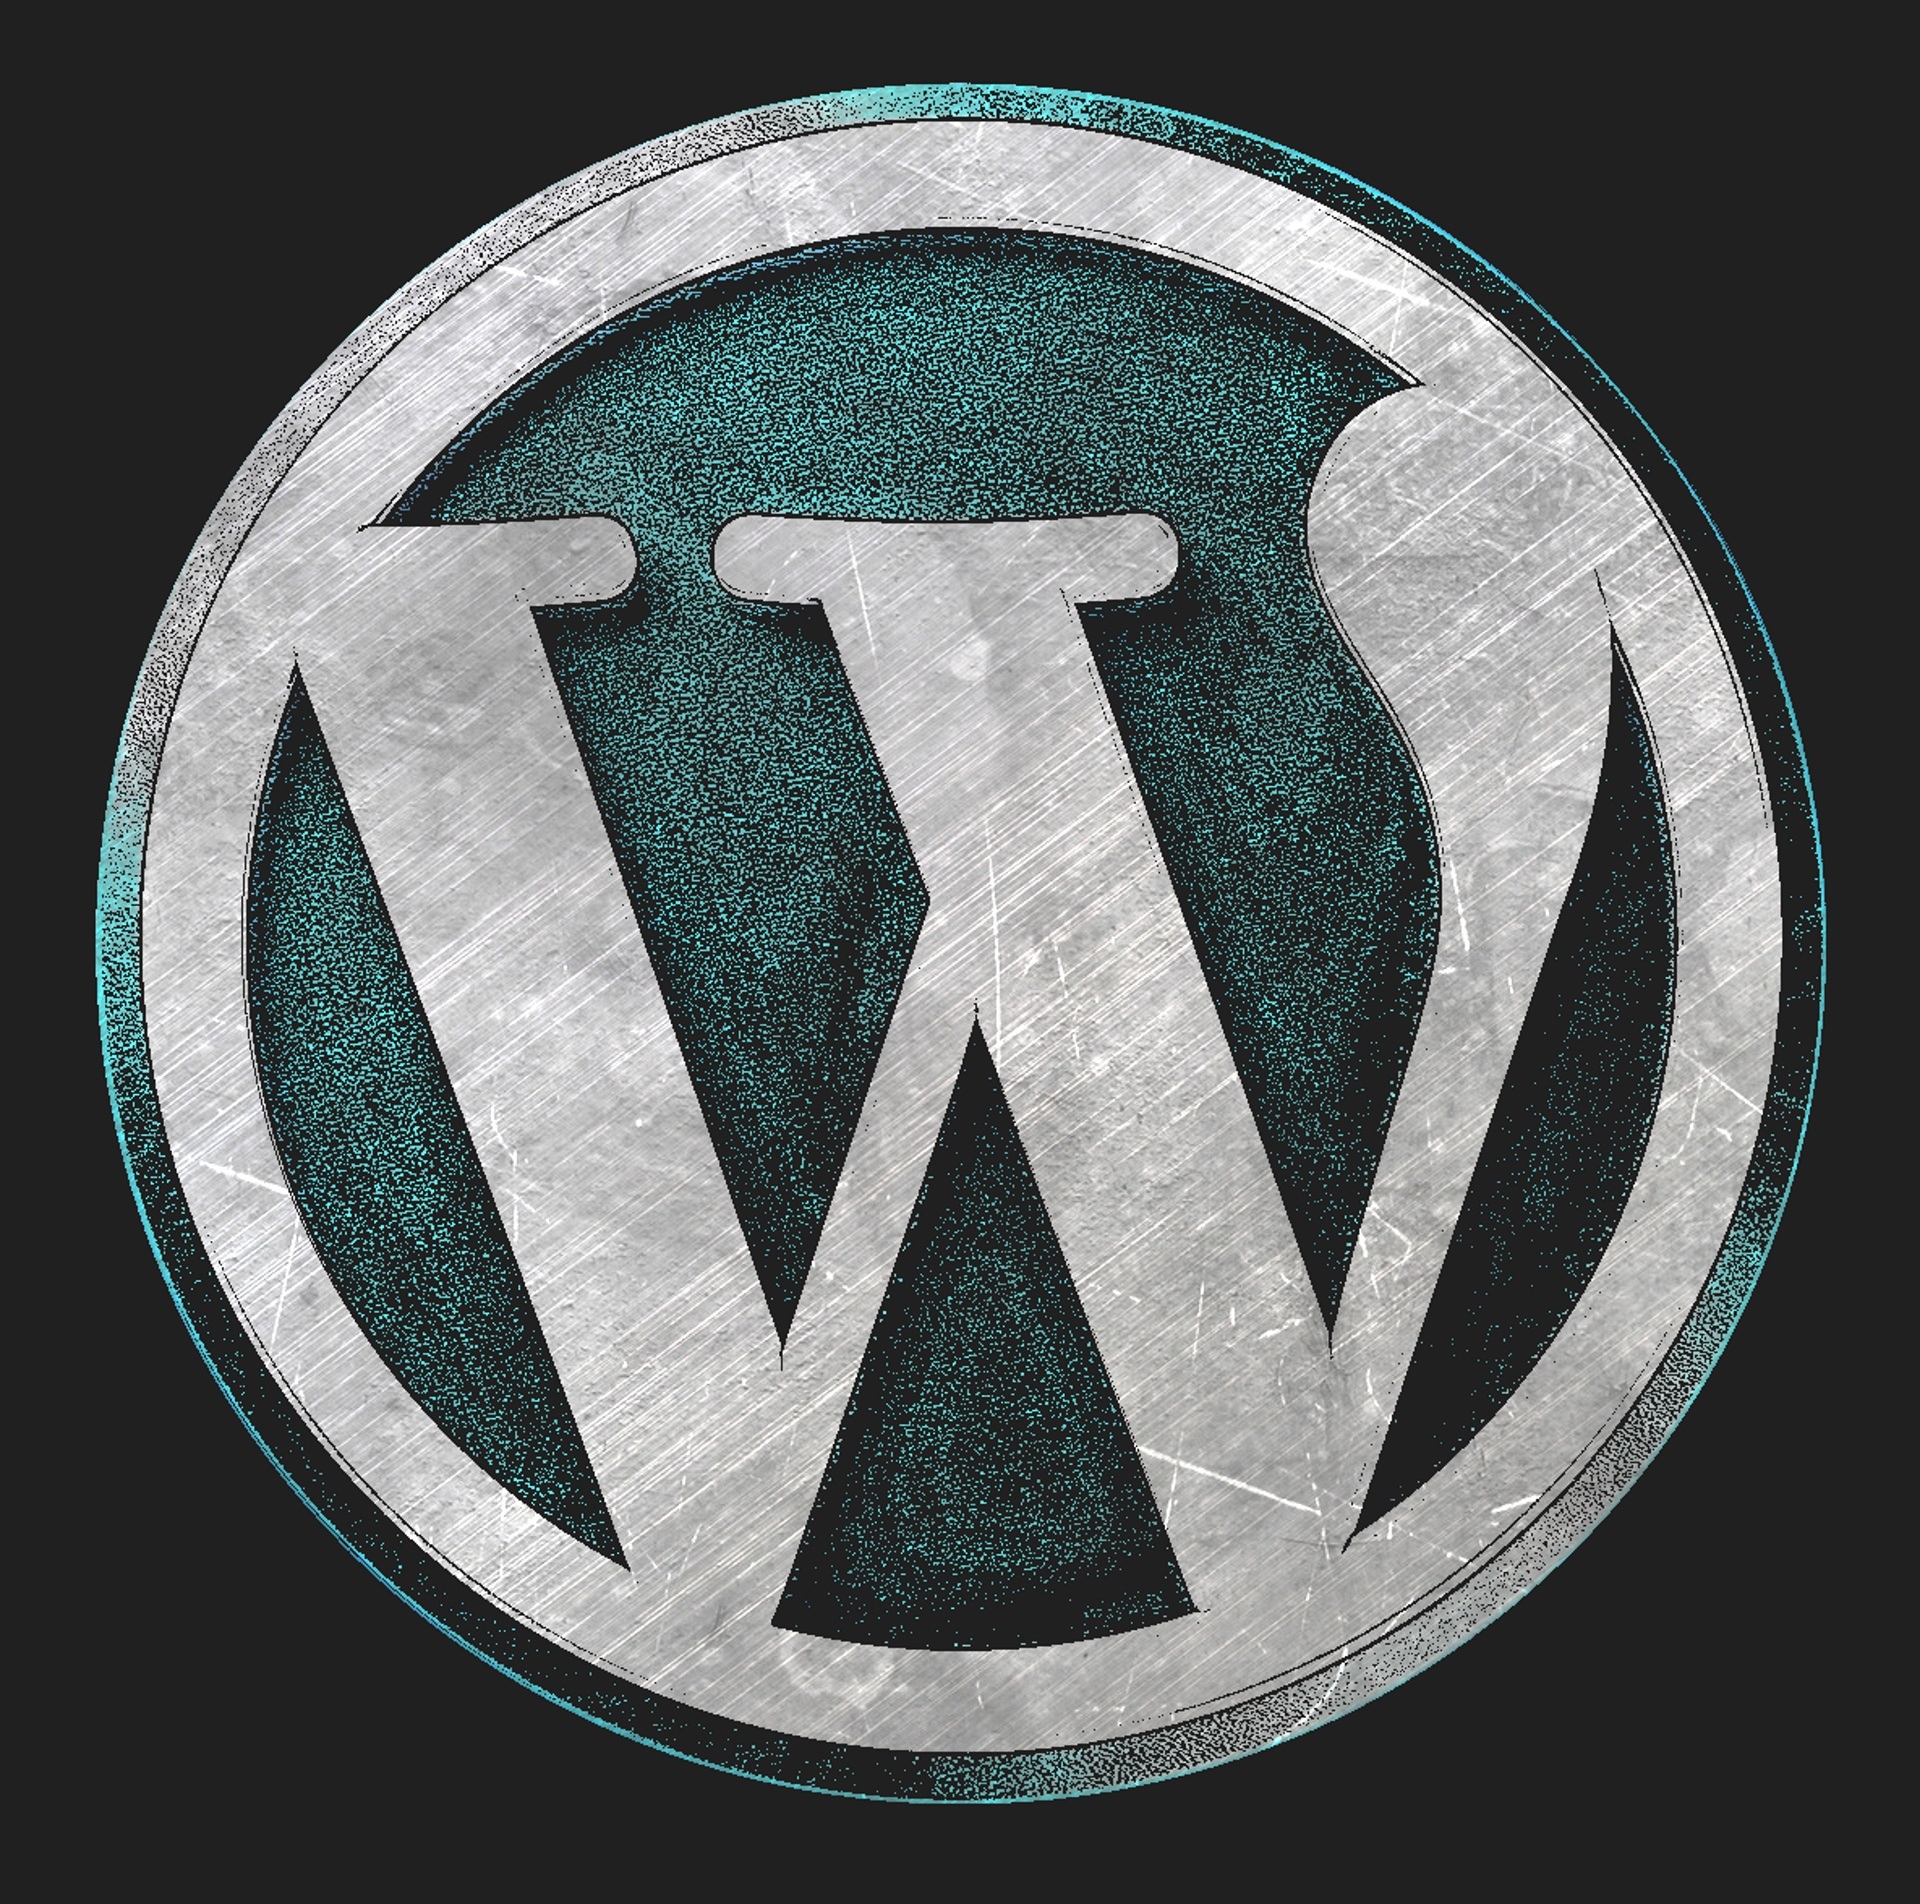 wordpress-